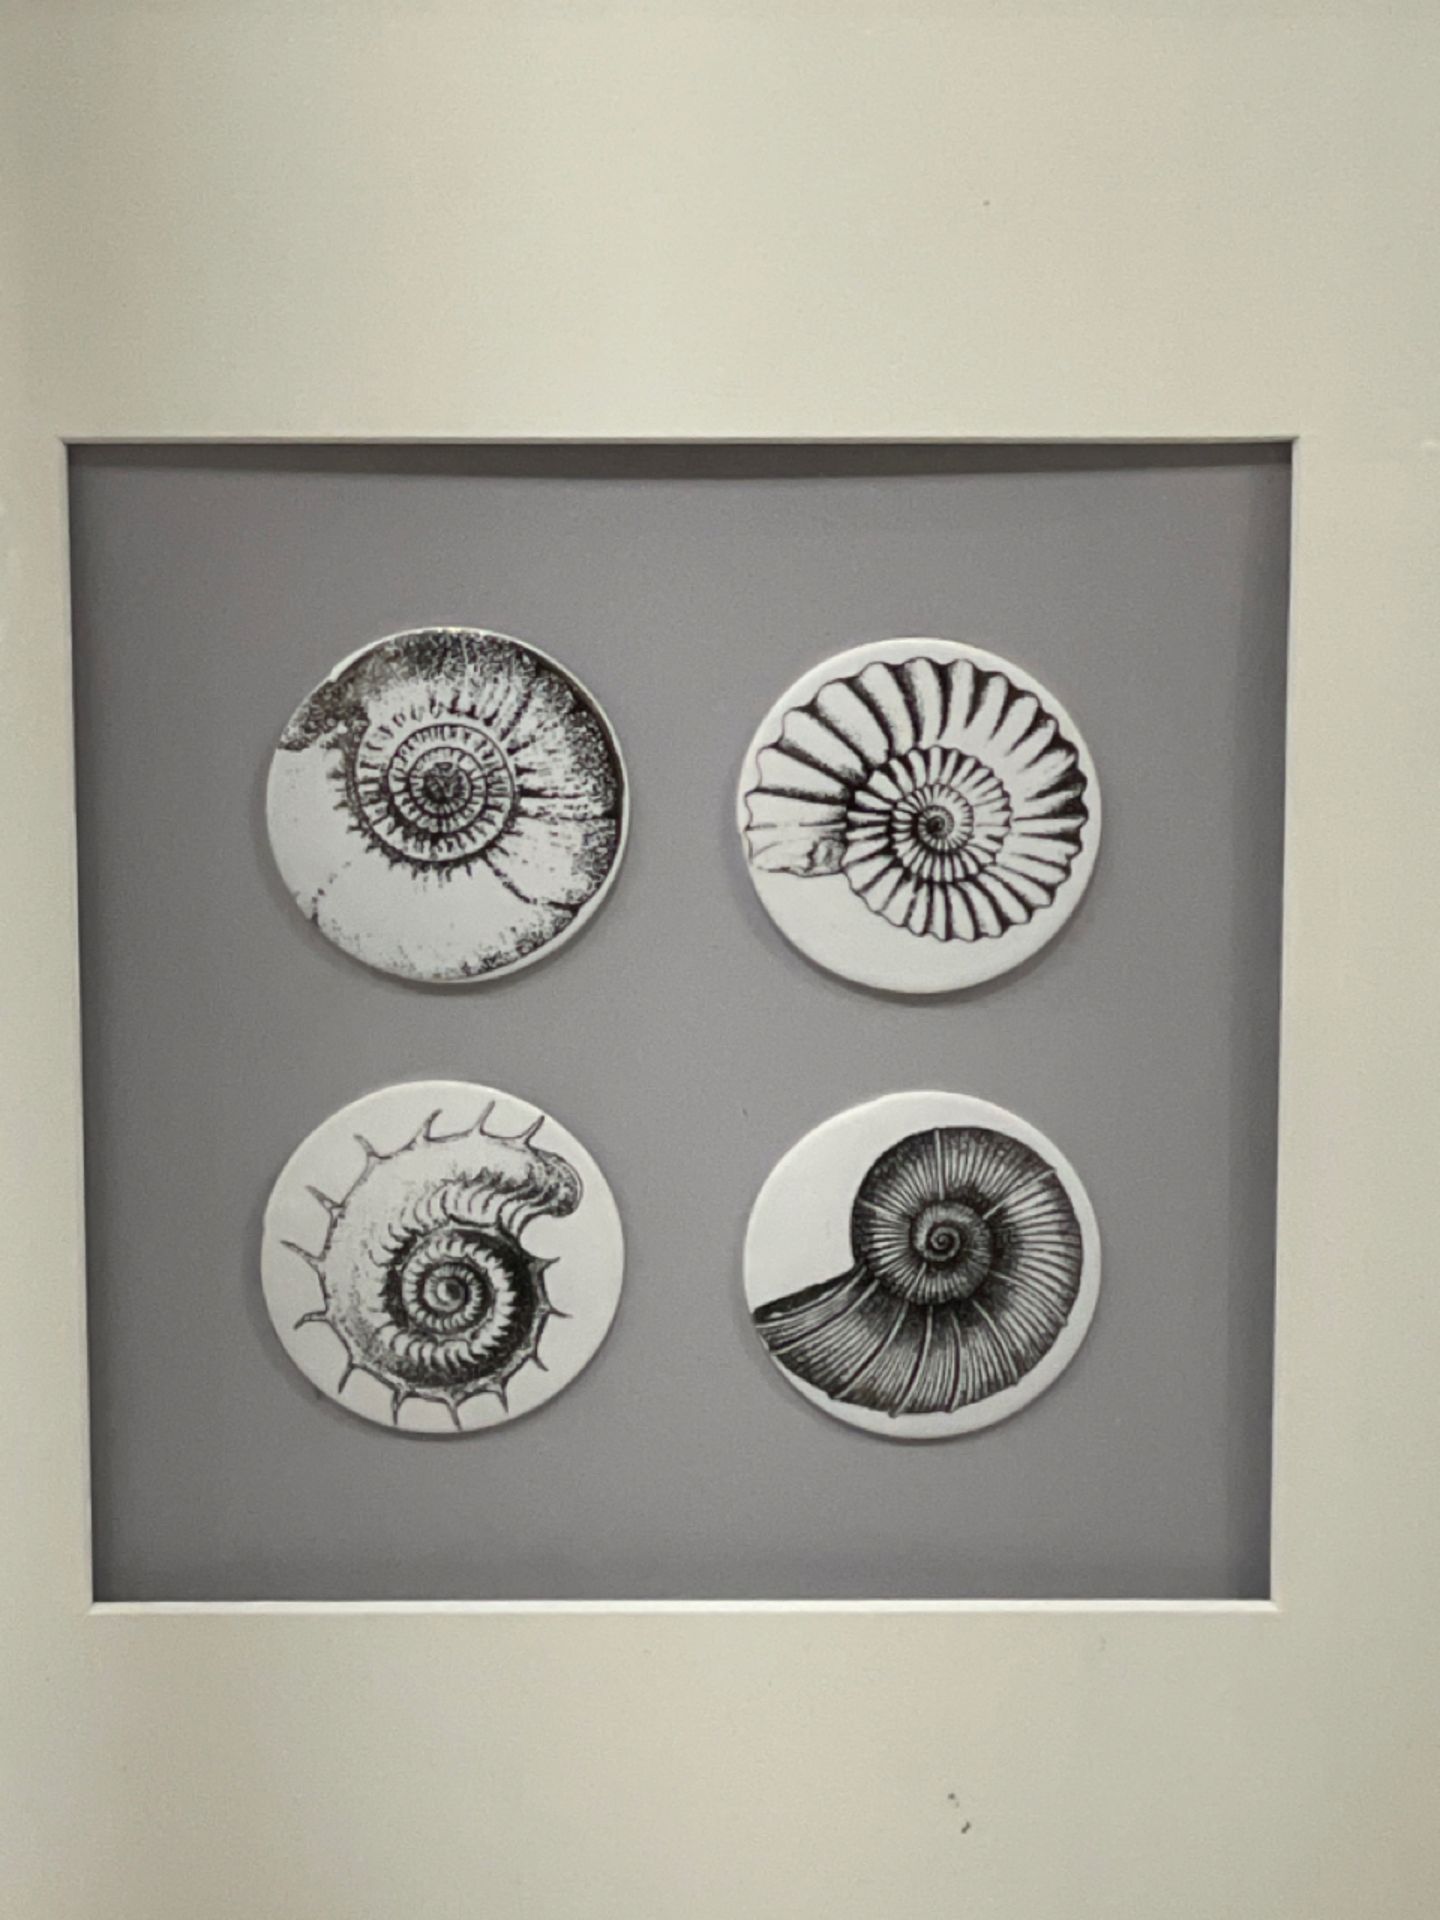 Artwork - Shells From Claridge's Hotel - Image 2 of 2